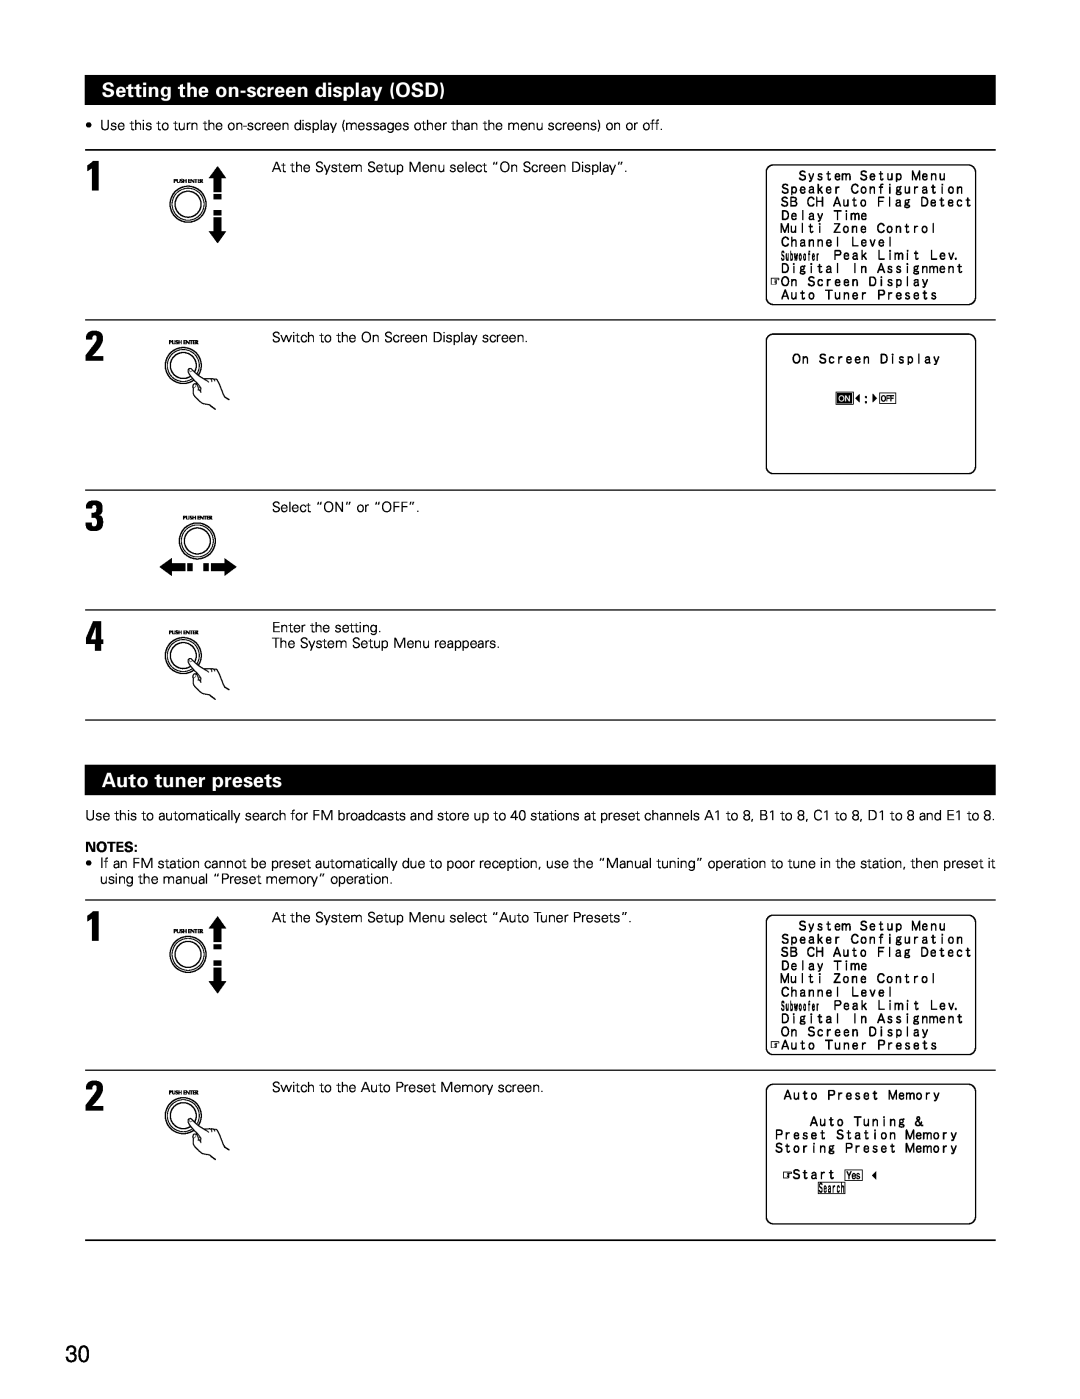 Denon AVR-4802 manual Setting the on-screendisplay OSD, Auto tuner presets, 2 3 4 